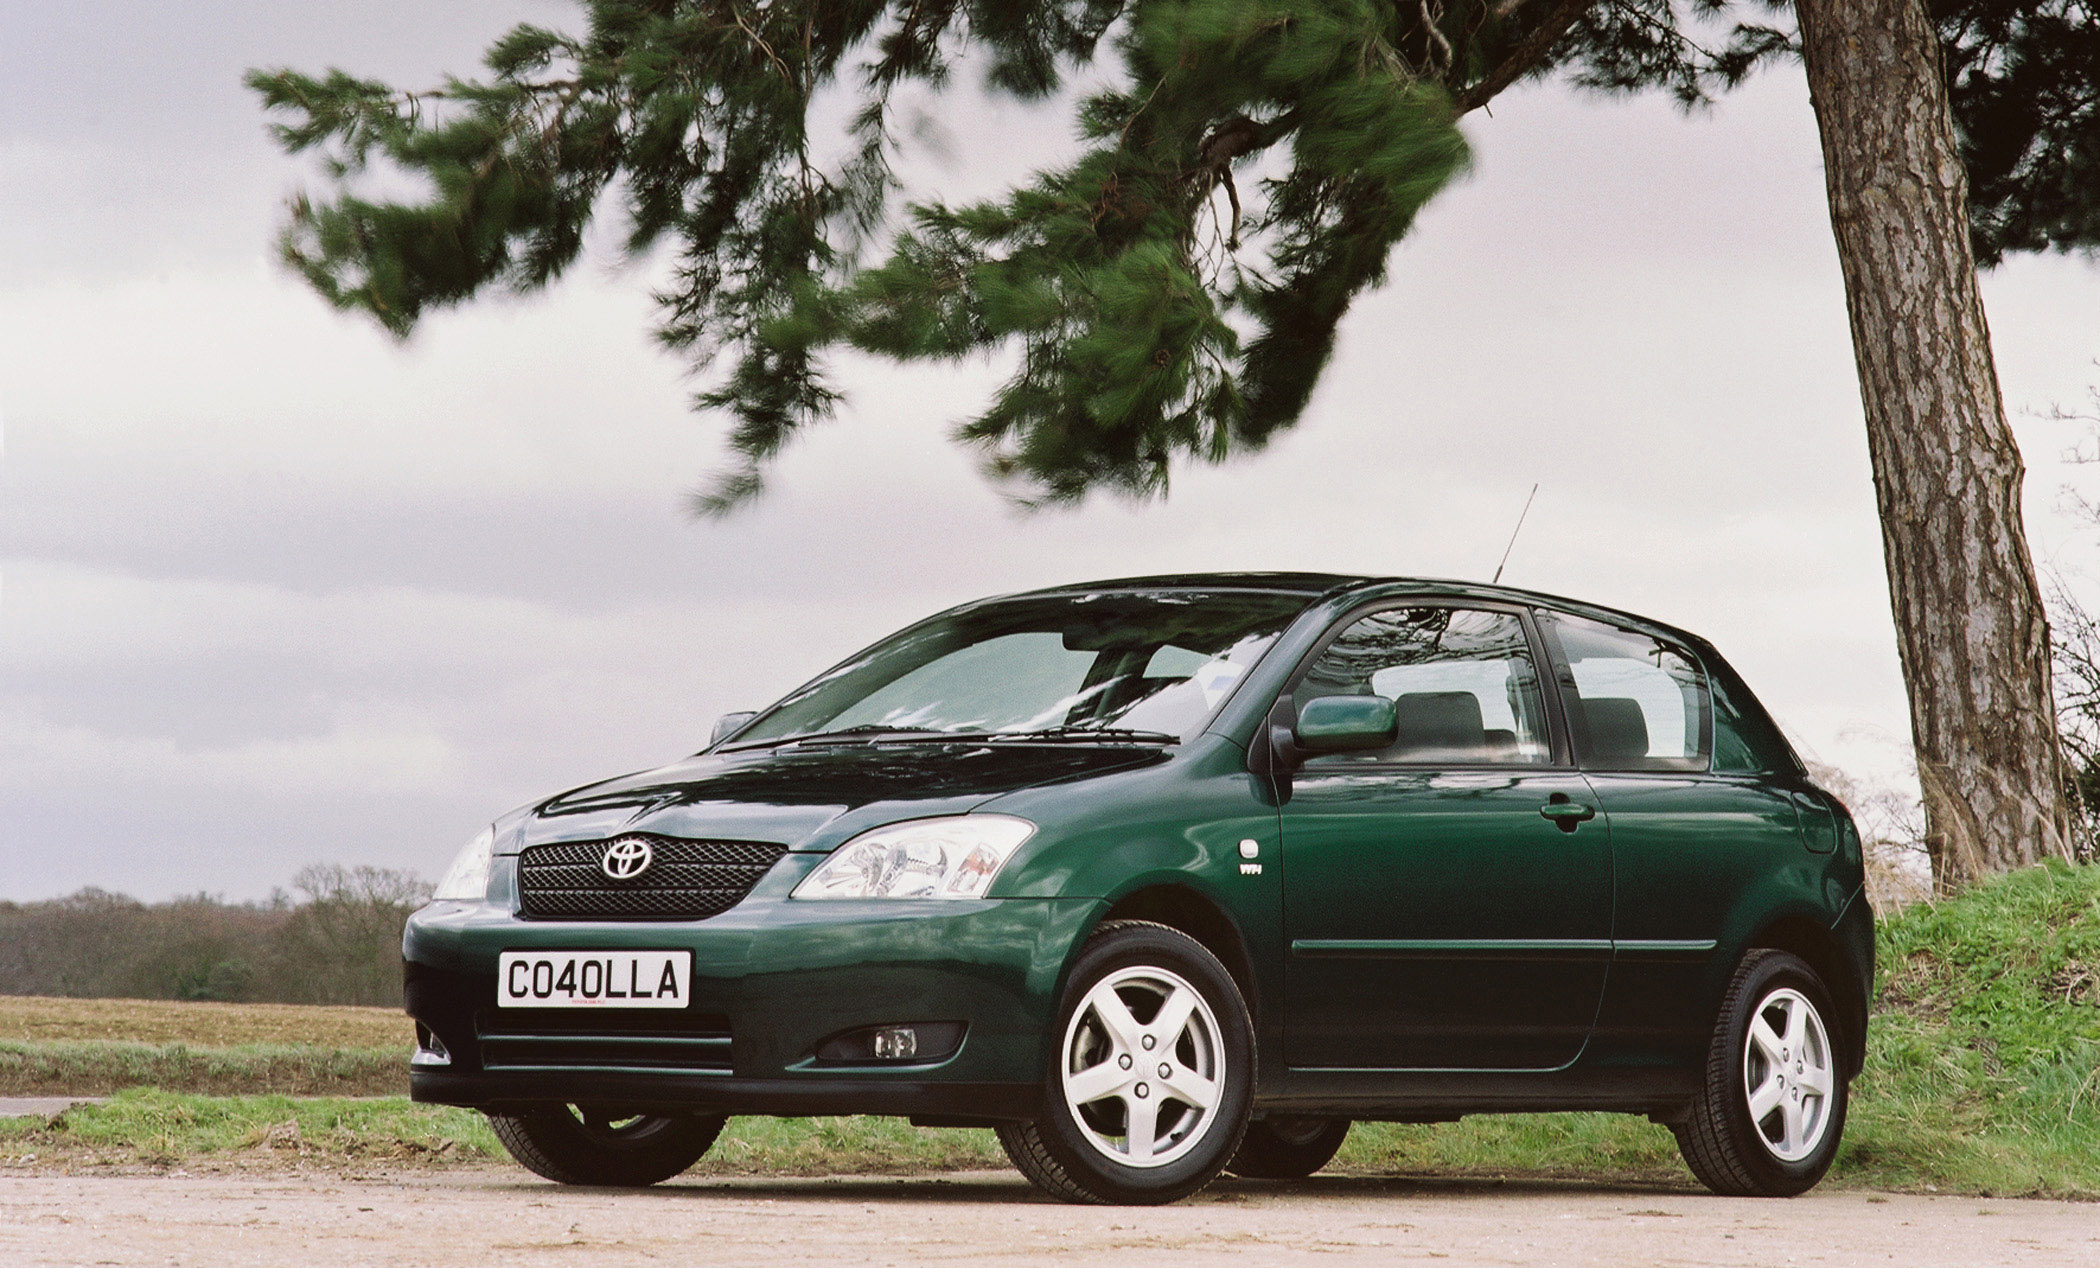 Тойота королла е120 хэтчбек. Toyota Corolla (2004-2006) хэтчбек. Toyota Corolla 2004 хэтчбек. Toyota Corolla 2006 хэтчбек. Toyota Corolla 120 хэтчбек 2002-2004.